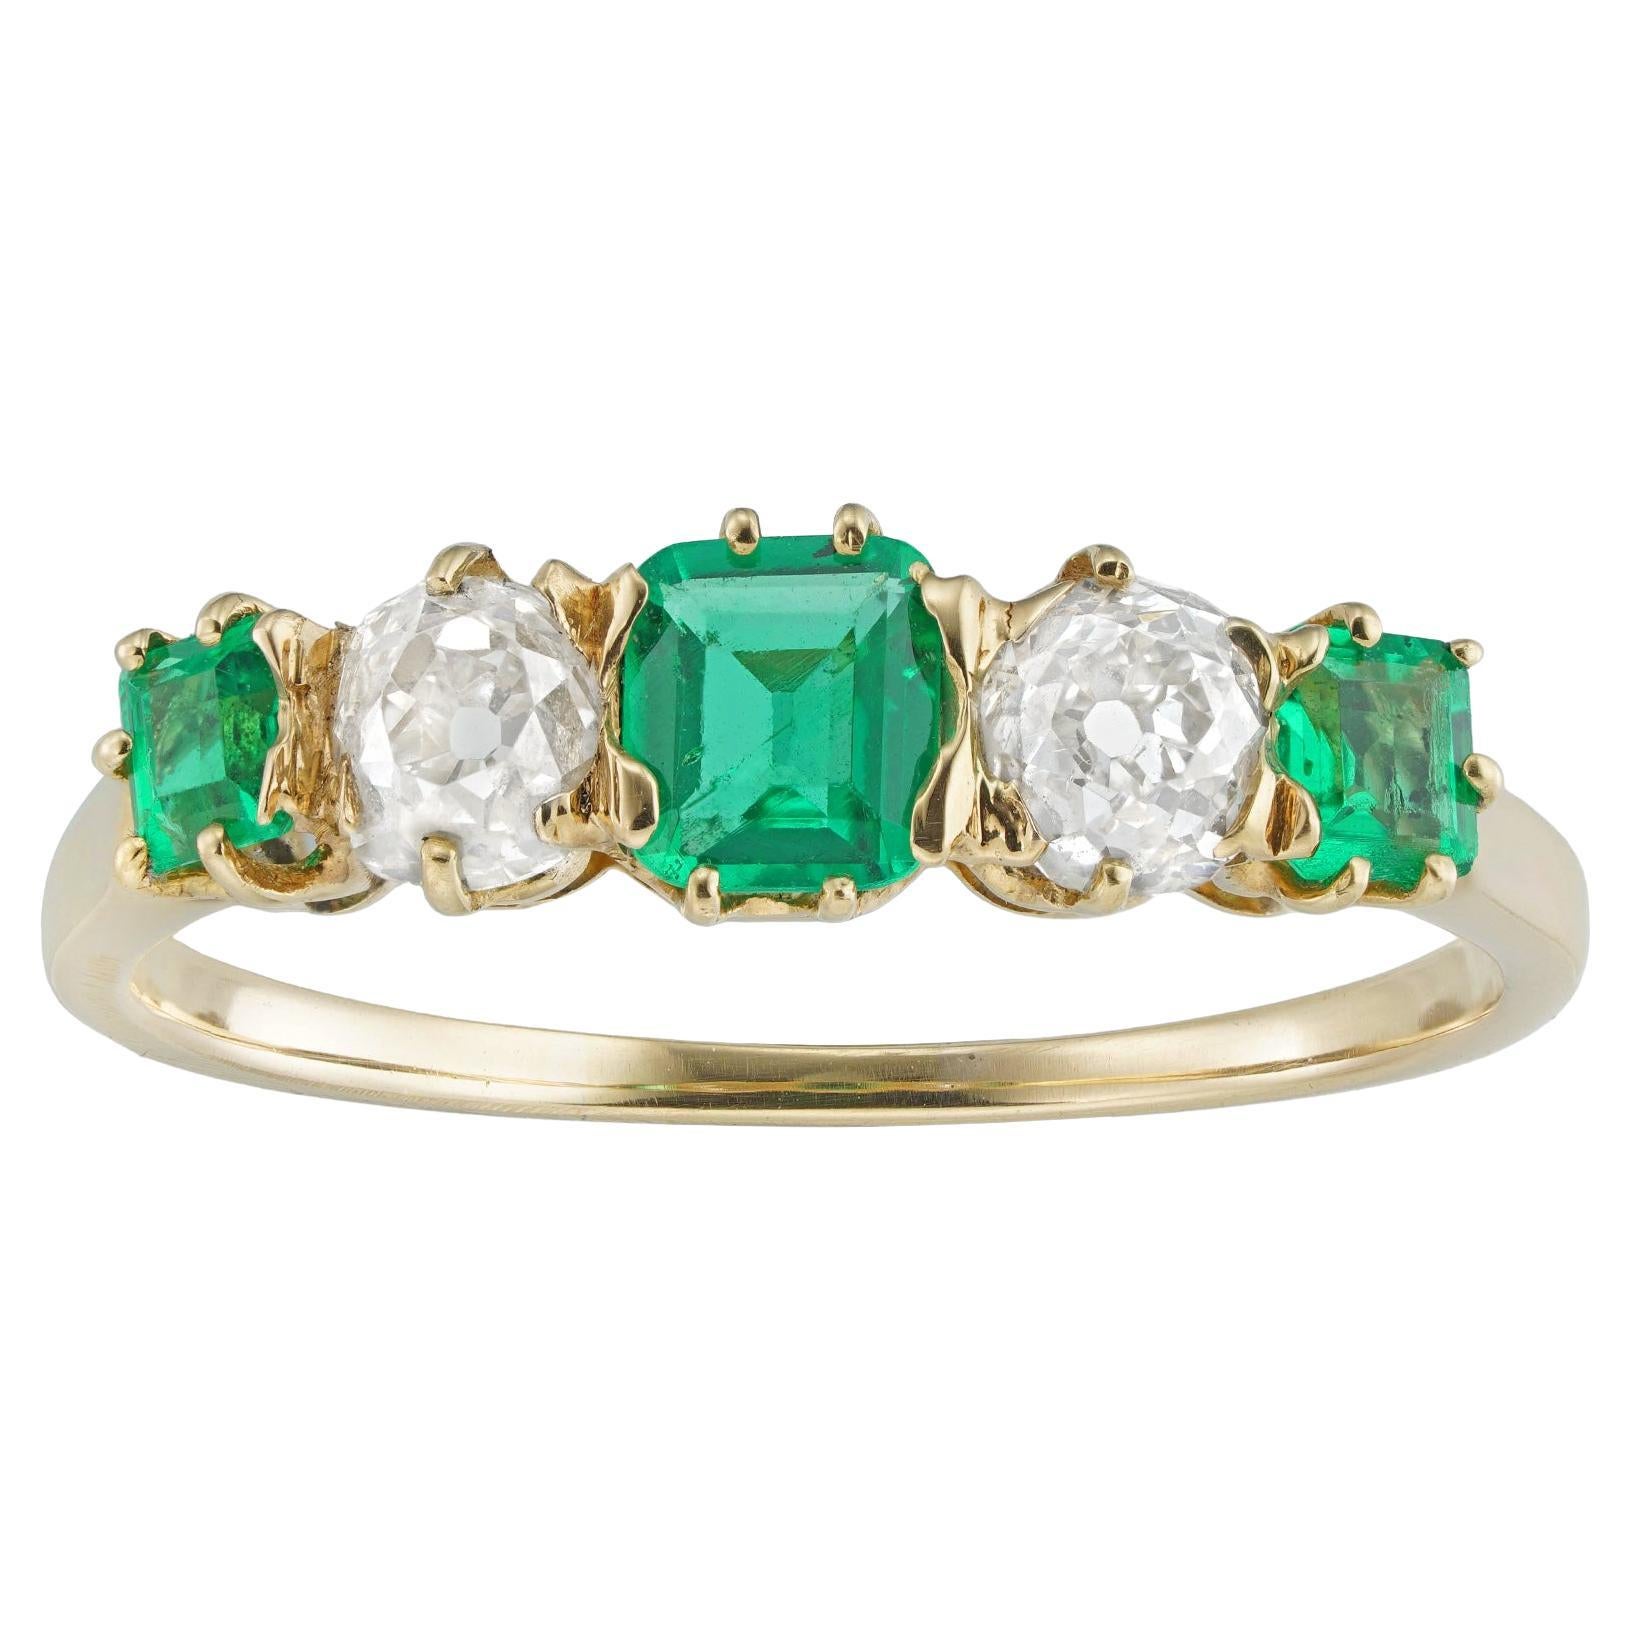 An Edwardian emerald and diamond five-stone ring